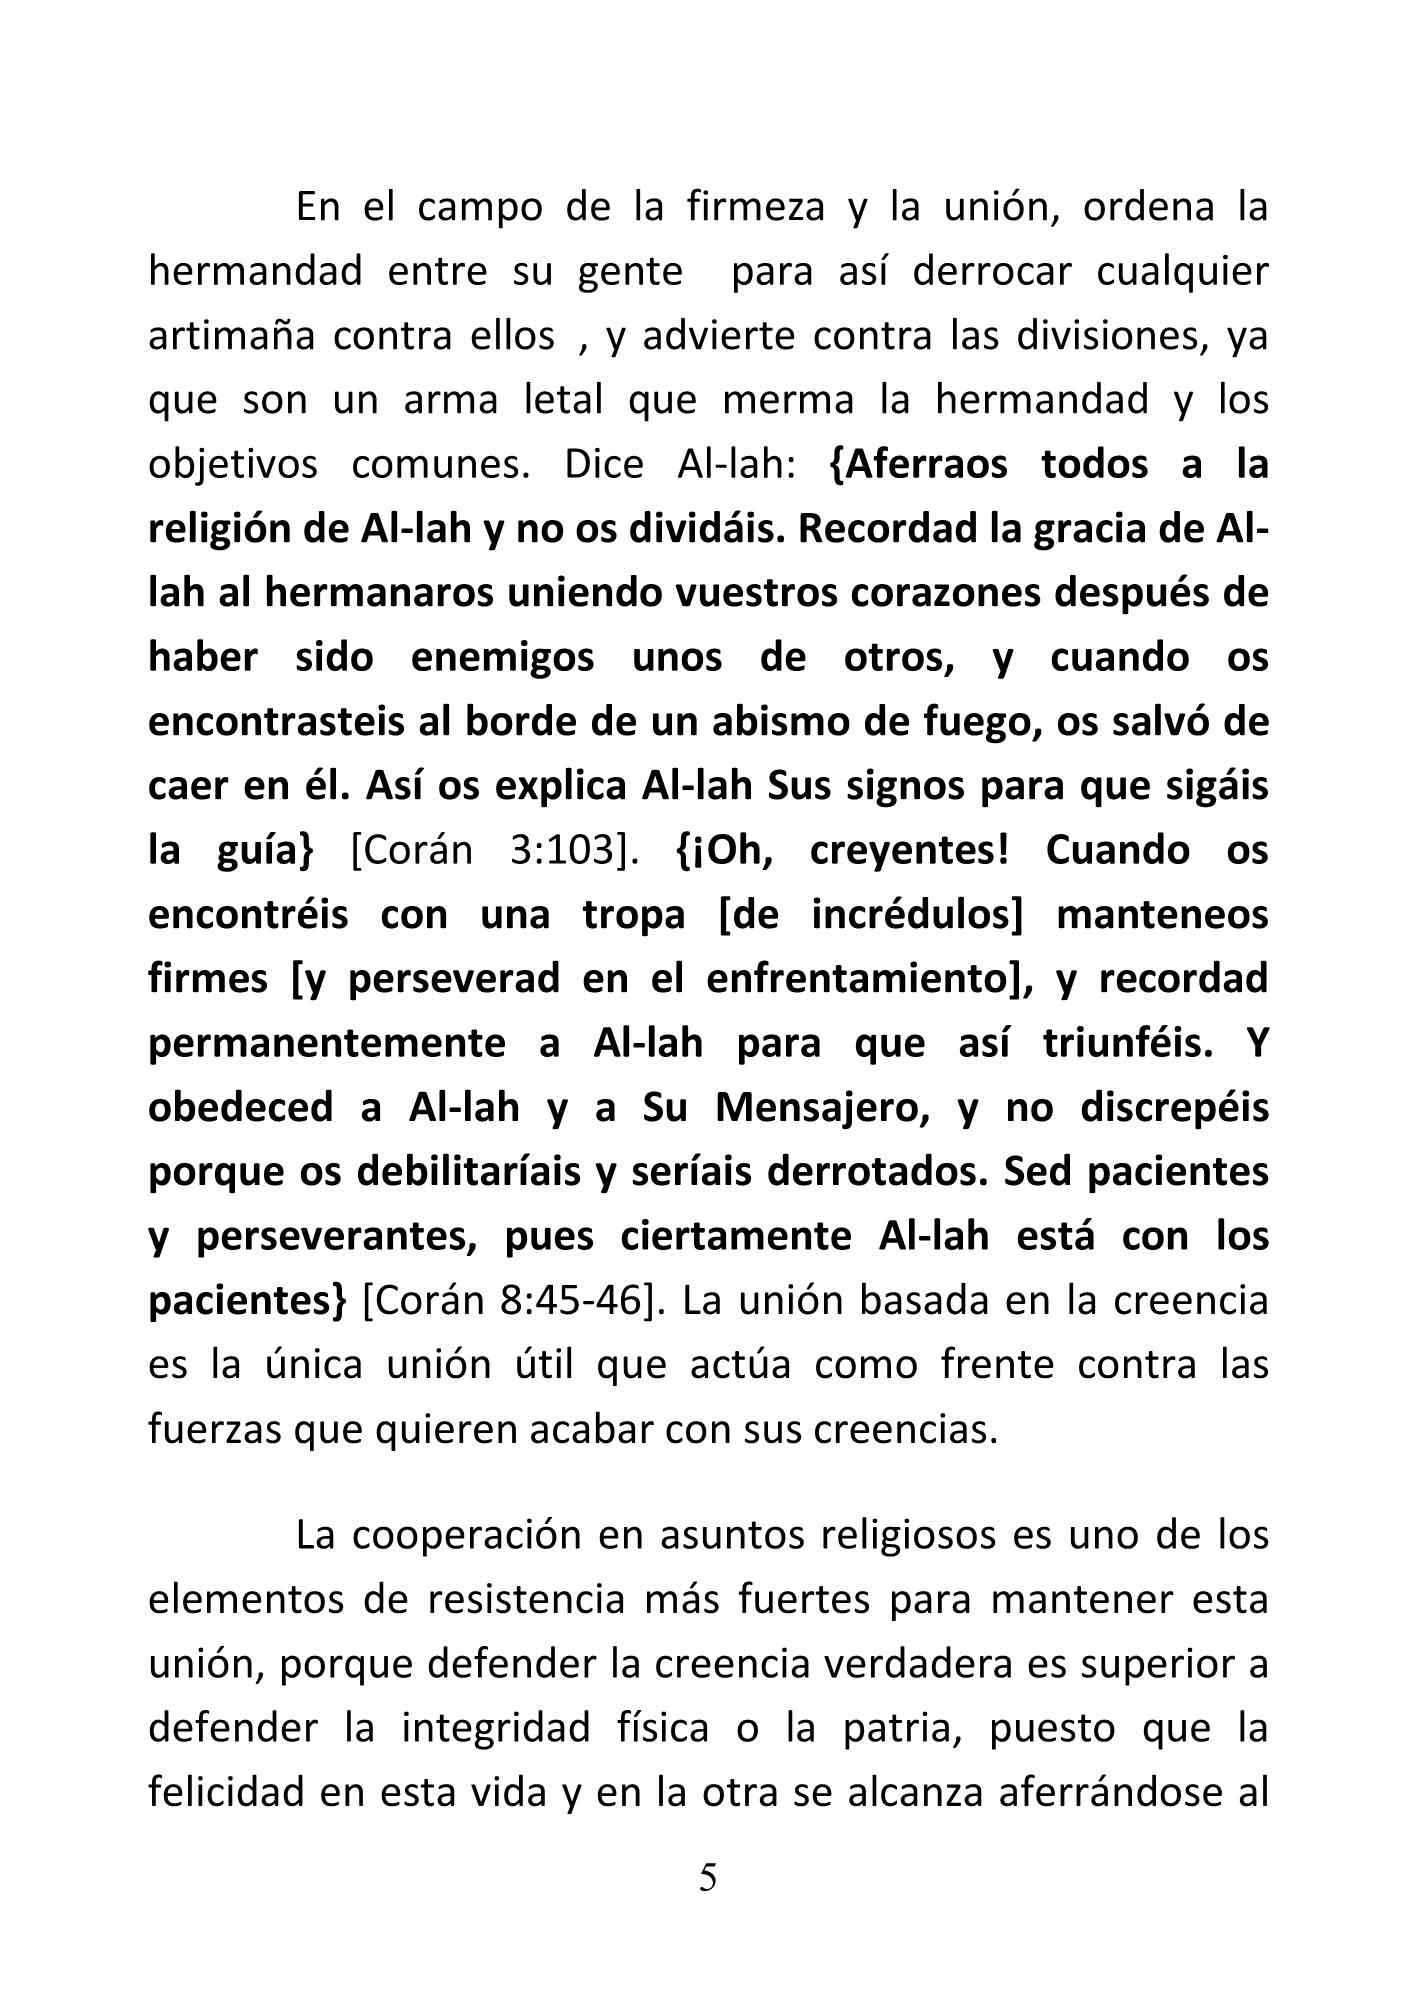 إسباني - الإسلام دين متكامل - El Islam es un sistema completo, y algunas de sus bellas cualidades.pdf, 14-Sayfa 